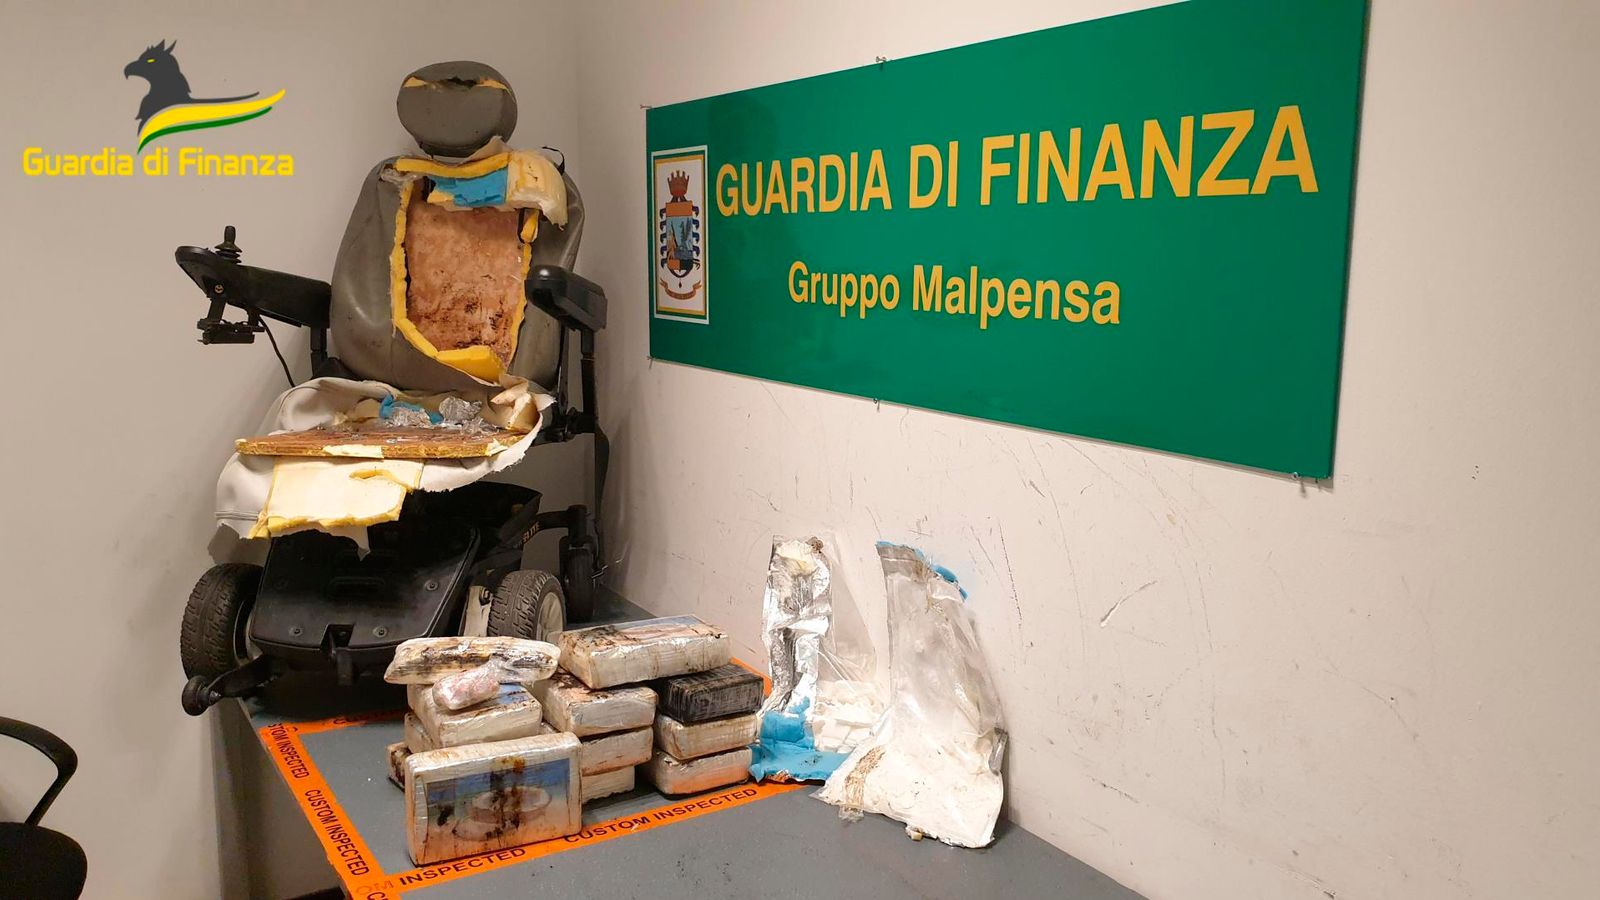 Police find cocaine worth £1.2m hidden in wheelchair at Milan airport | World News